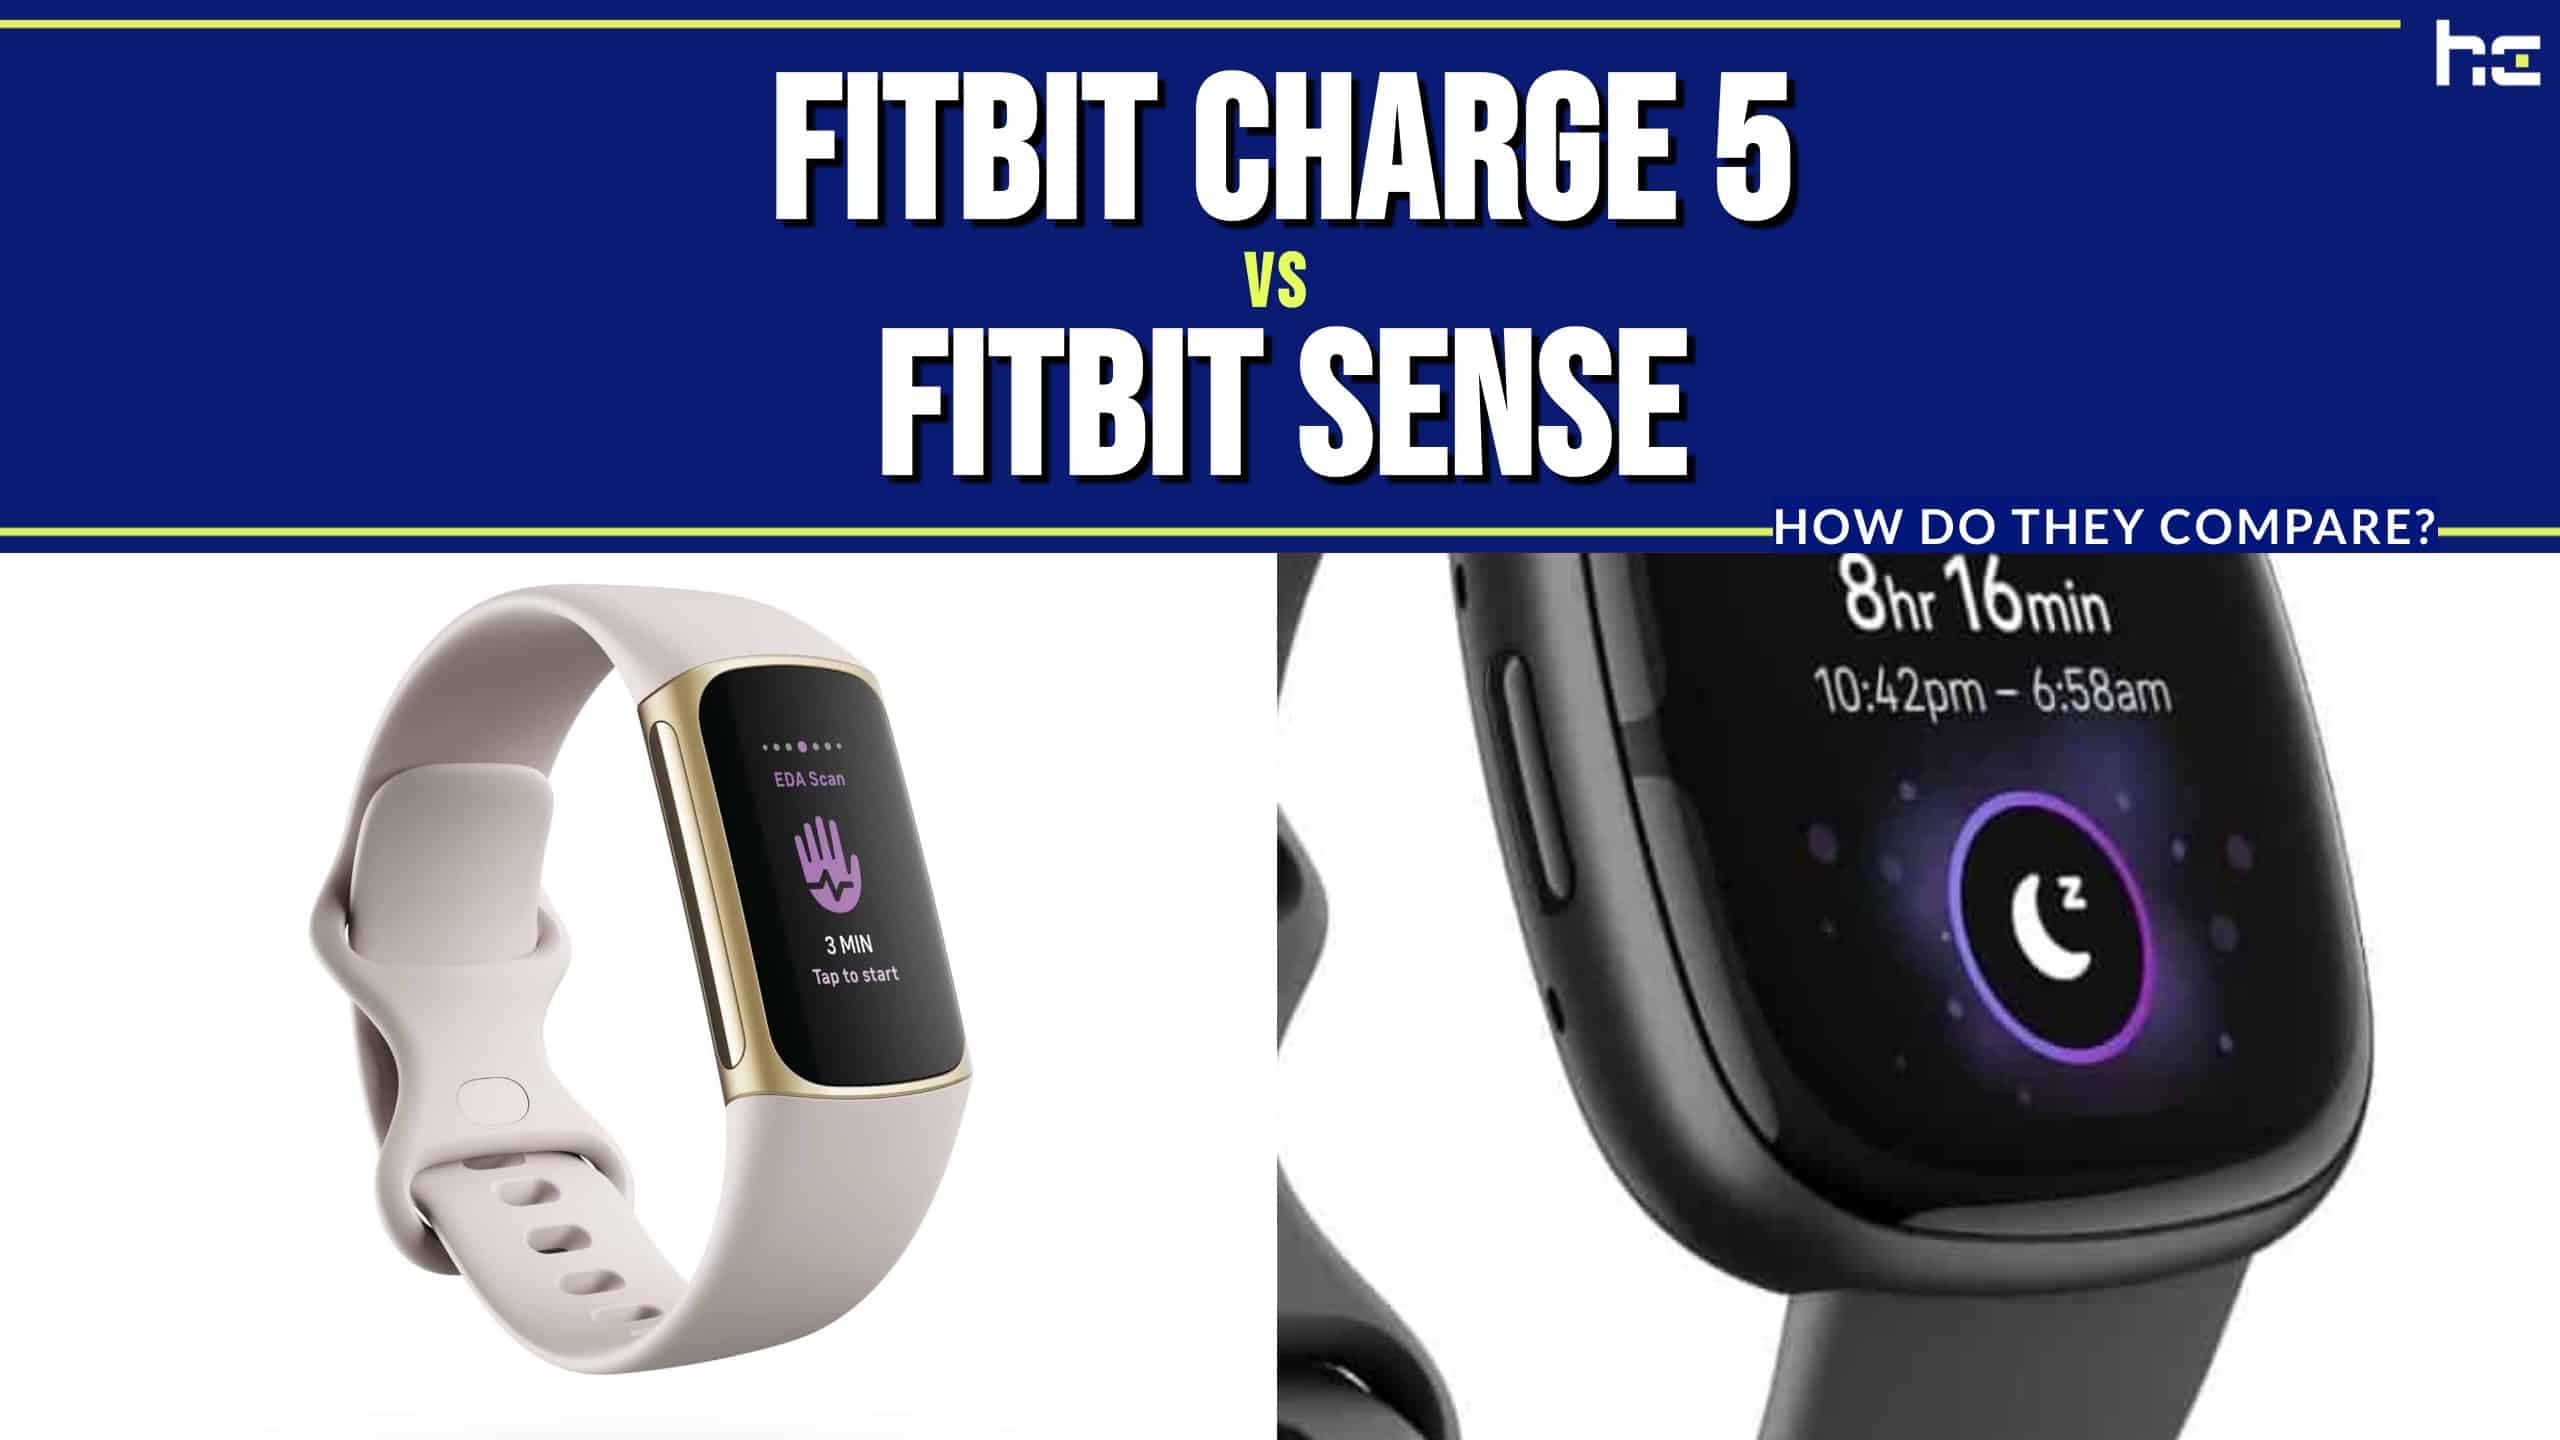 Fitbit charge 5 vs Fitbit sense